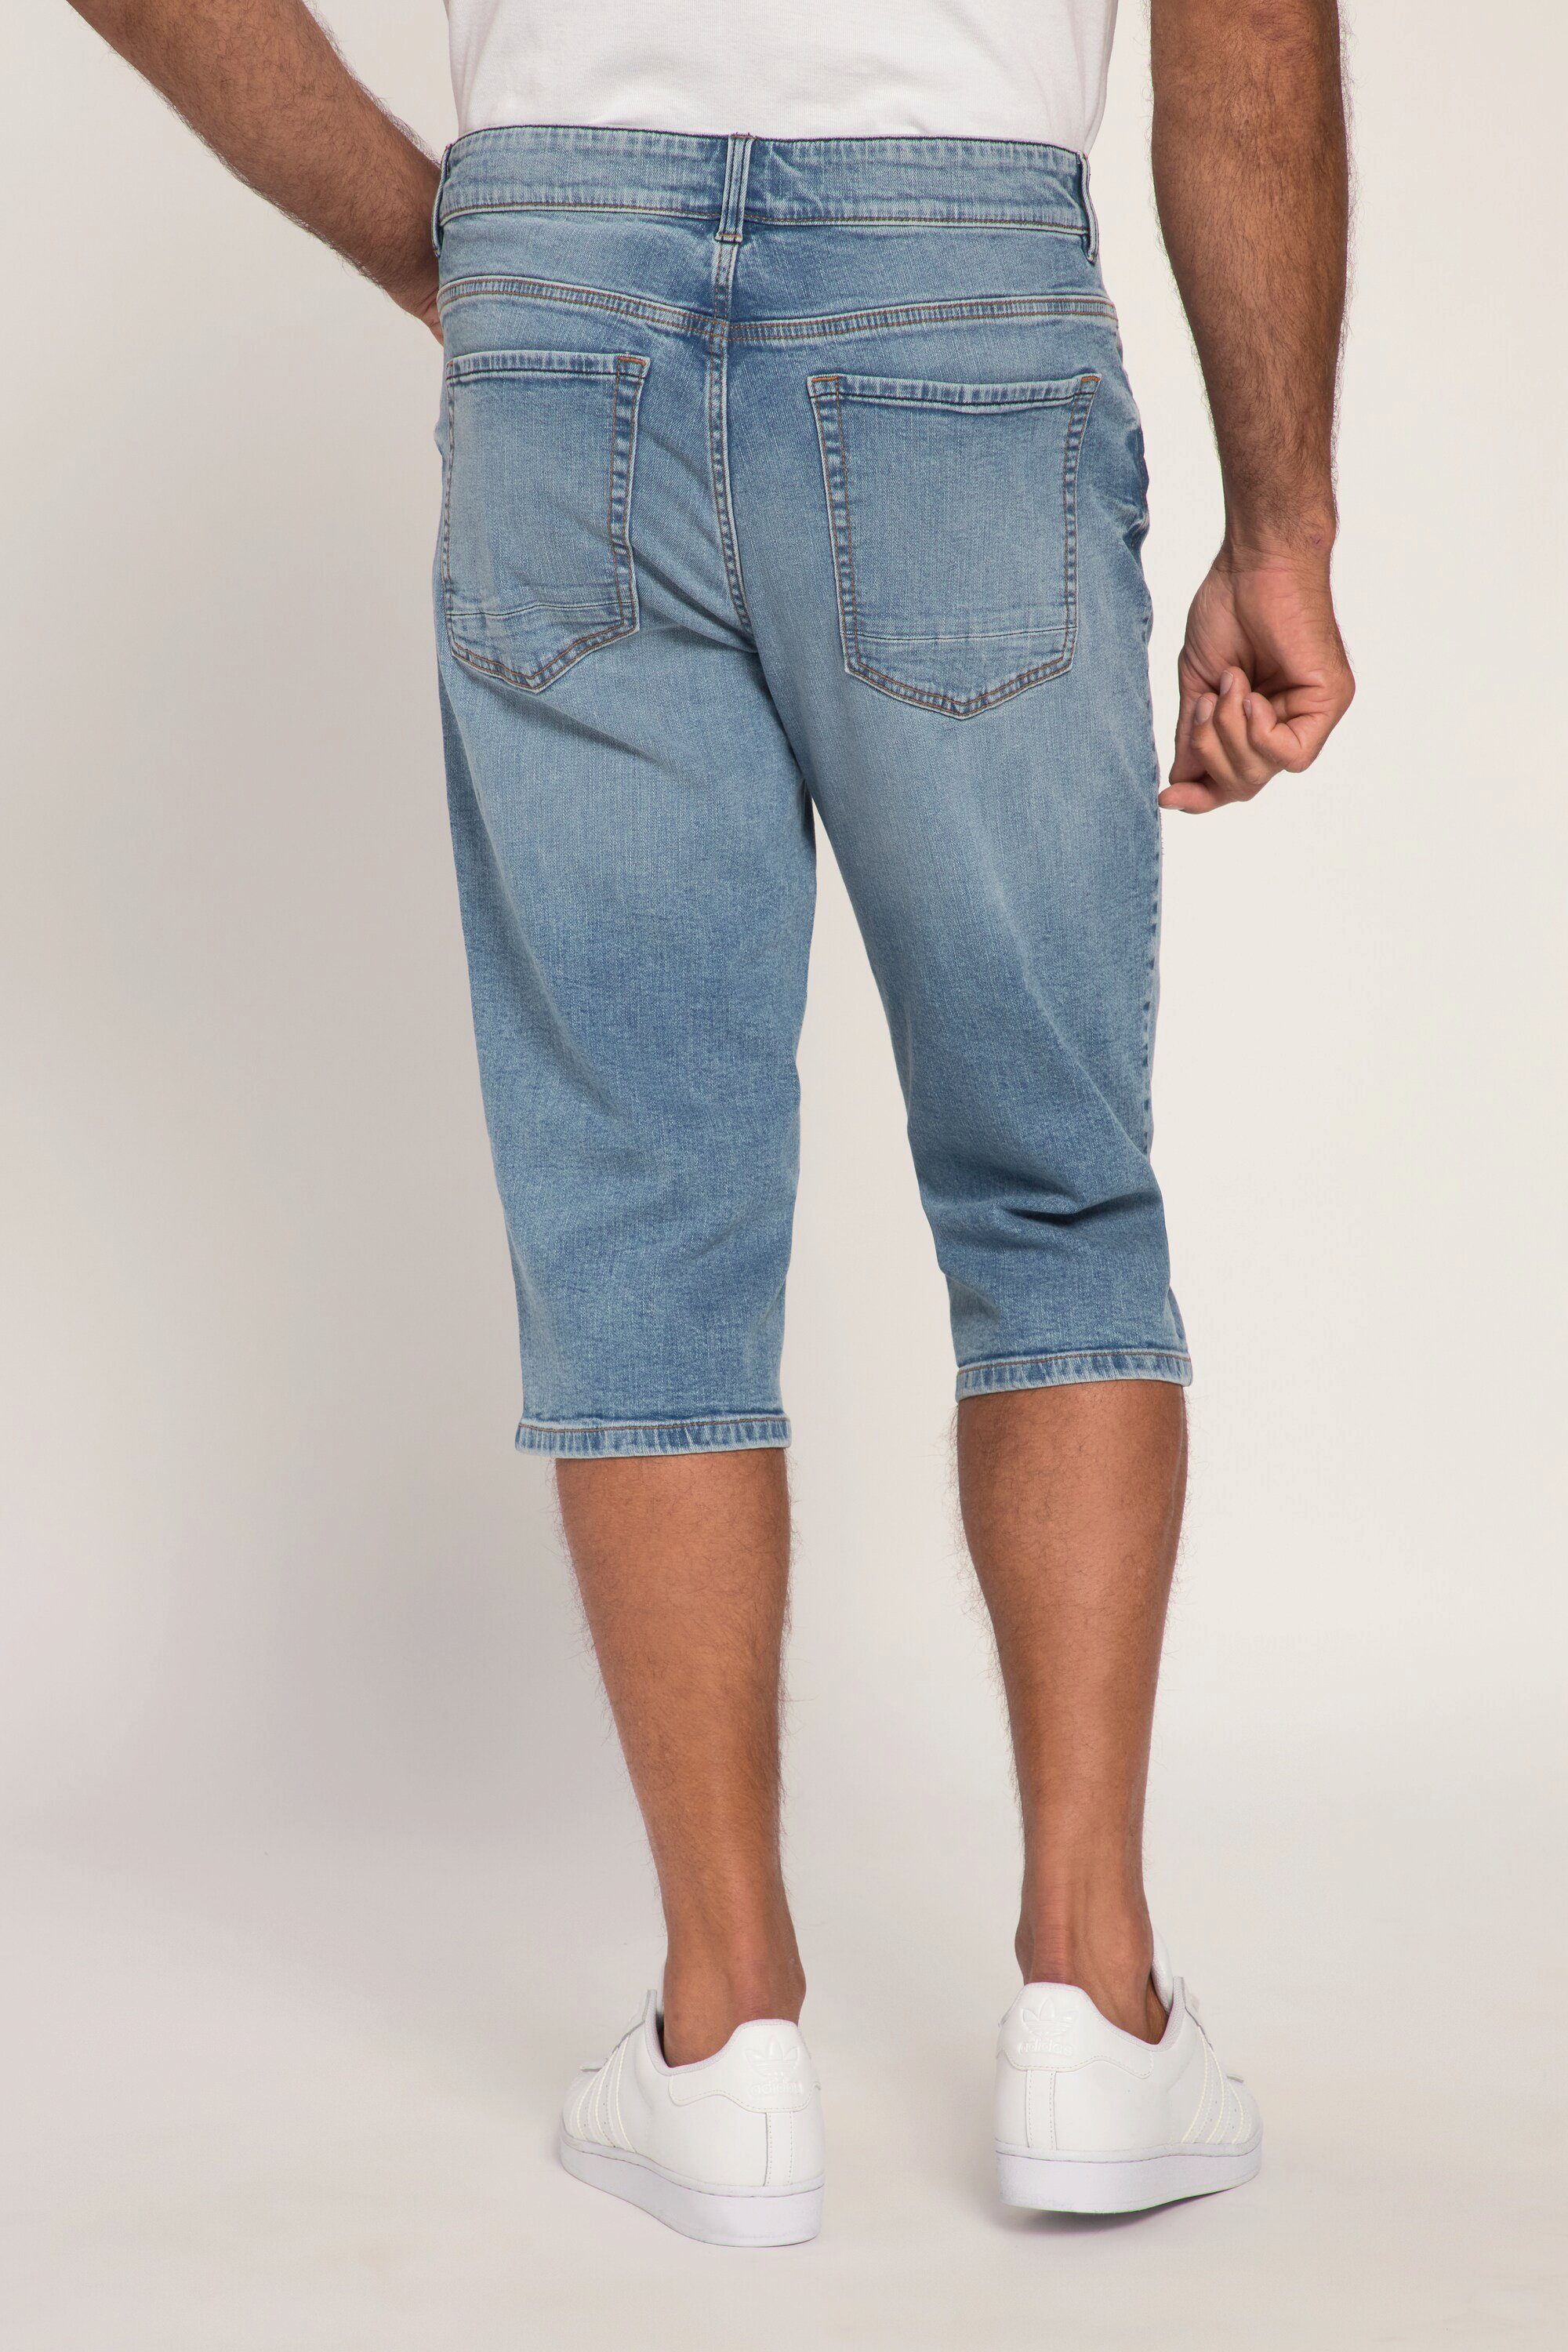 JP1880 Powerstretch 3/4-Jeans Jeansbermudas light blue 5-Pocket